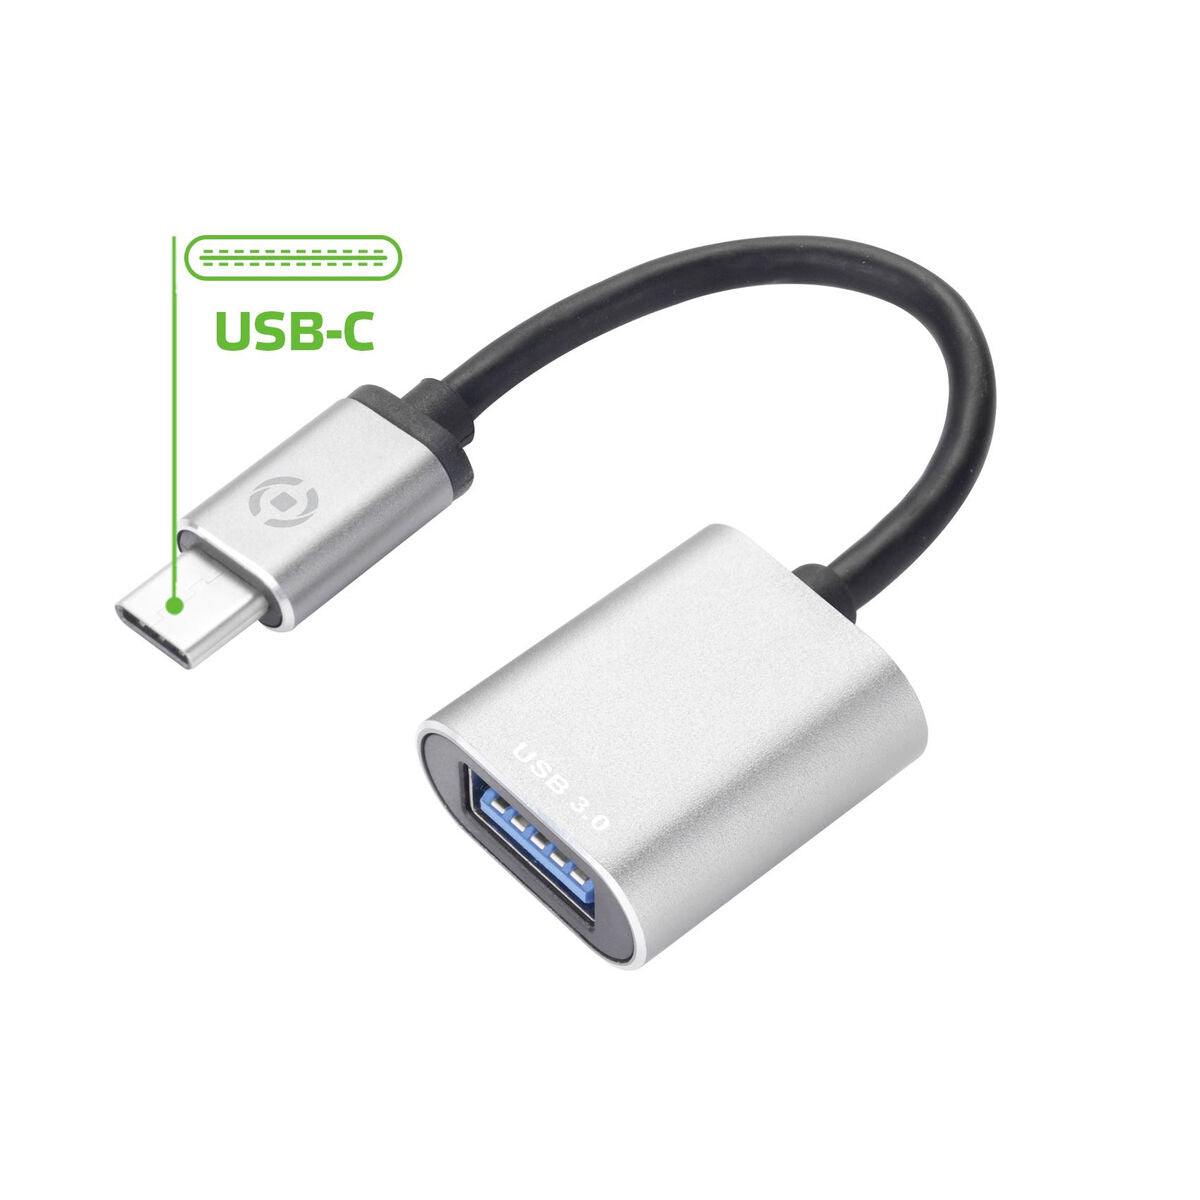 Cabo USB A para USB C Celly PROUSBCUSBDS Prateado